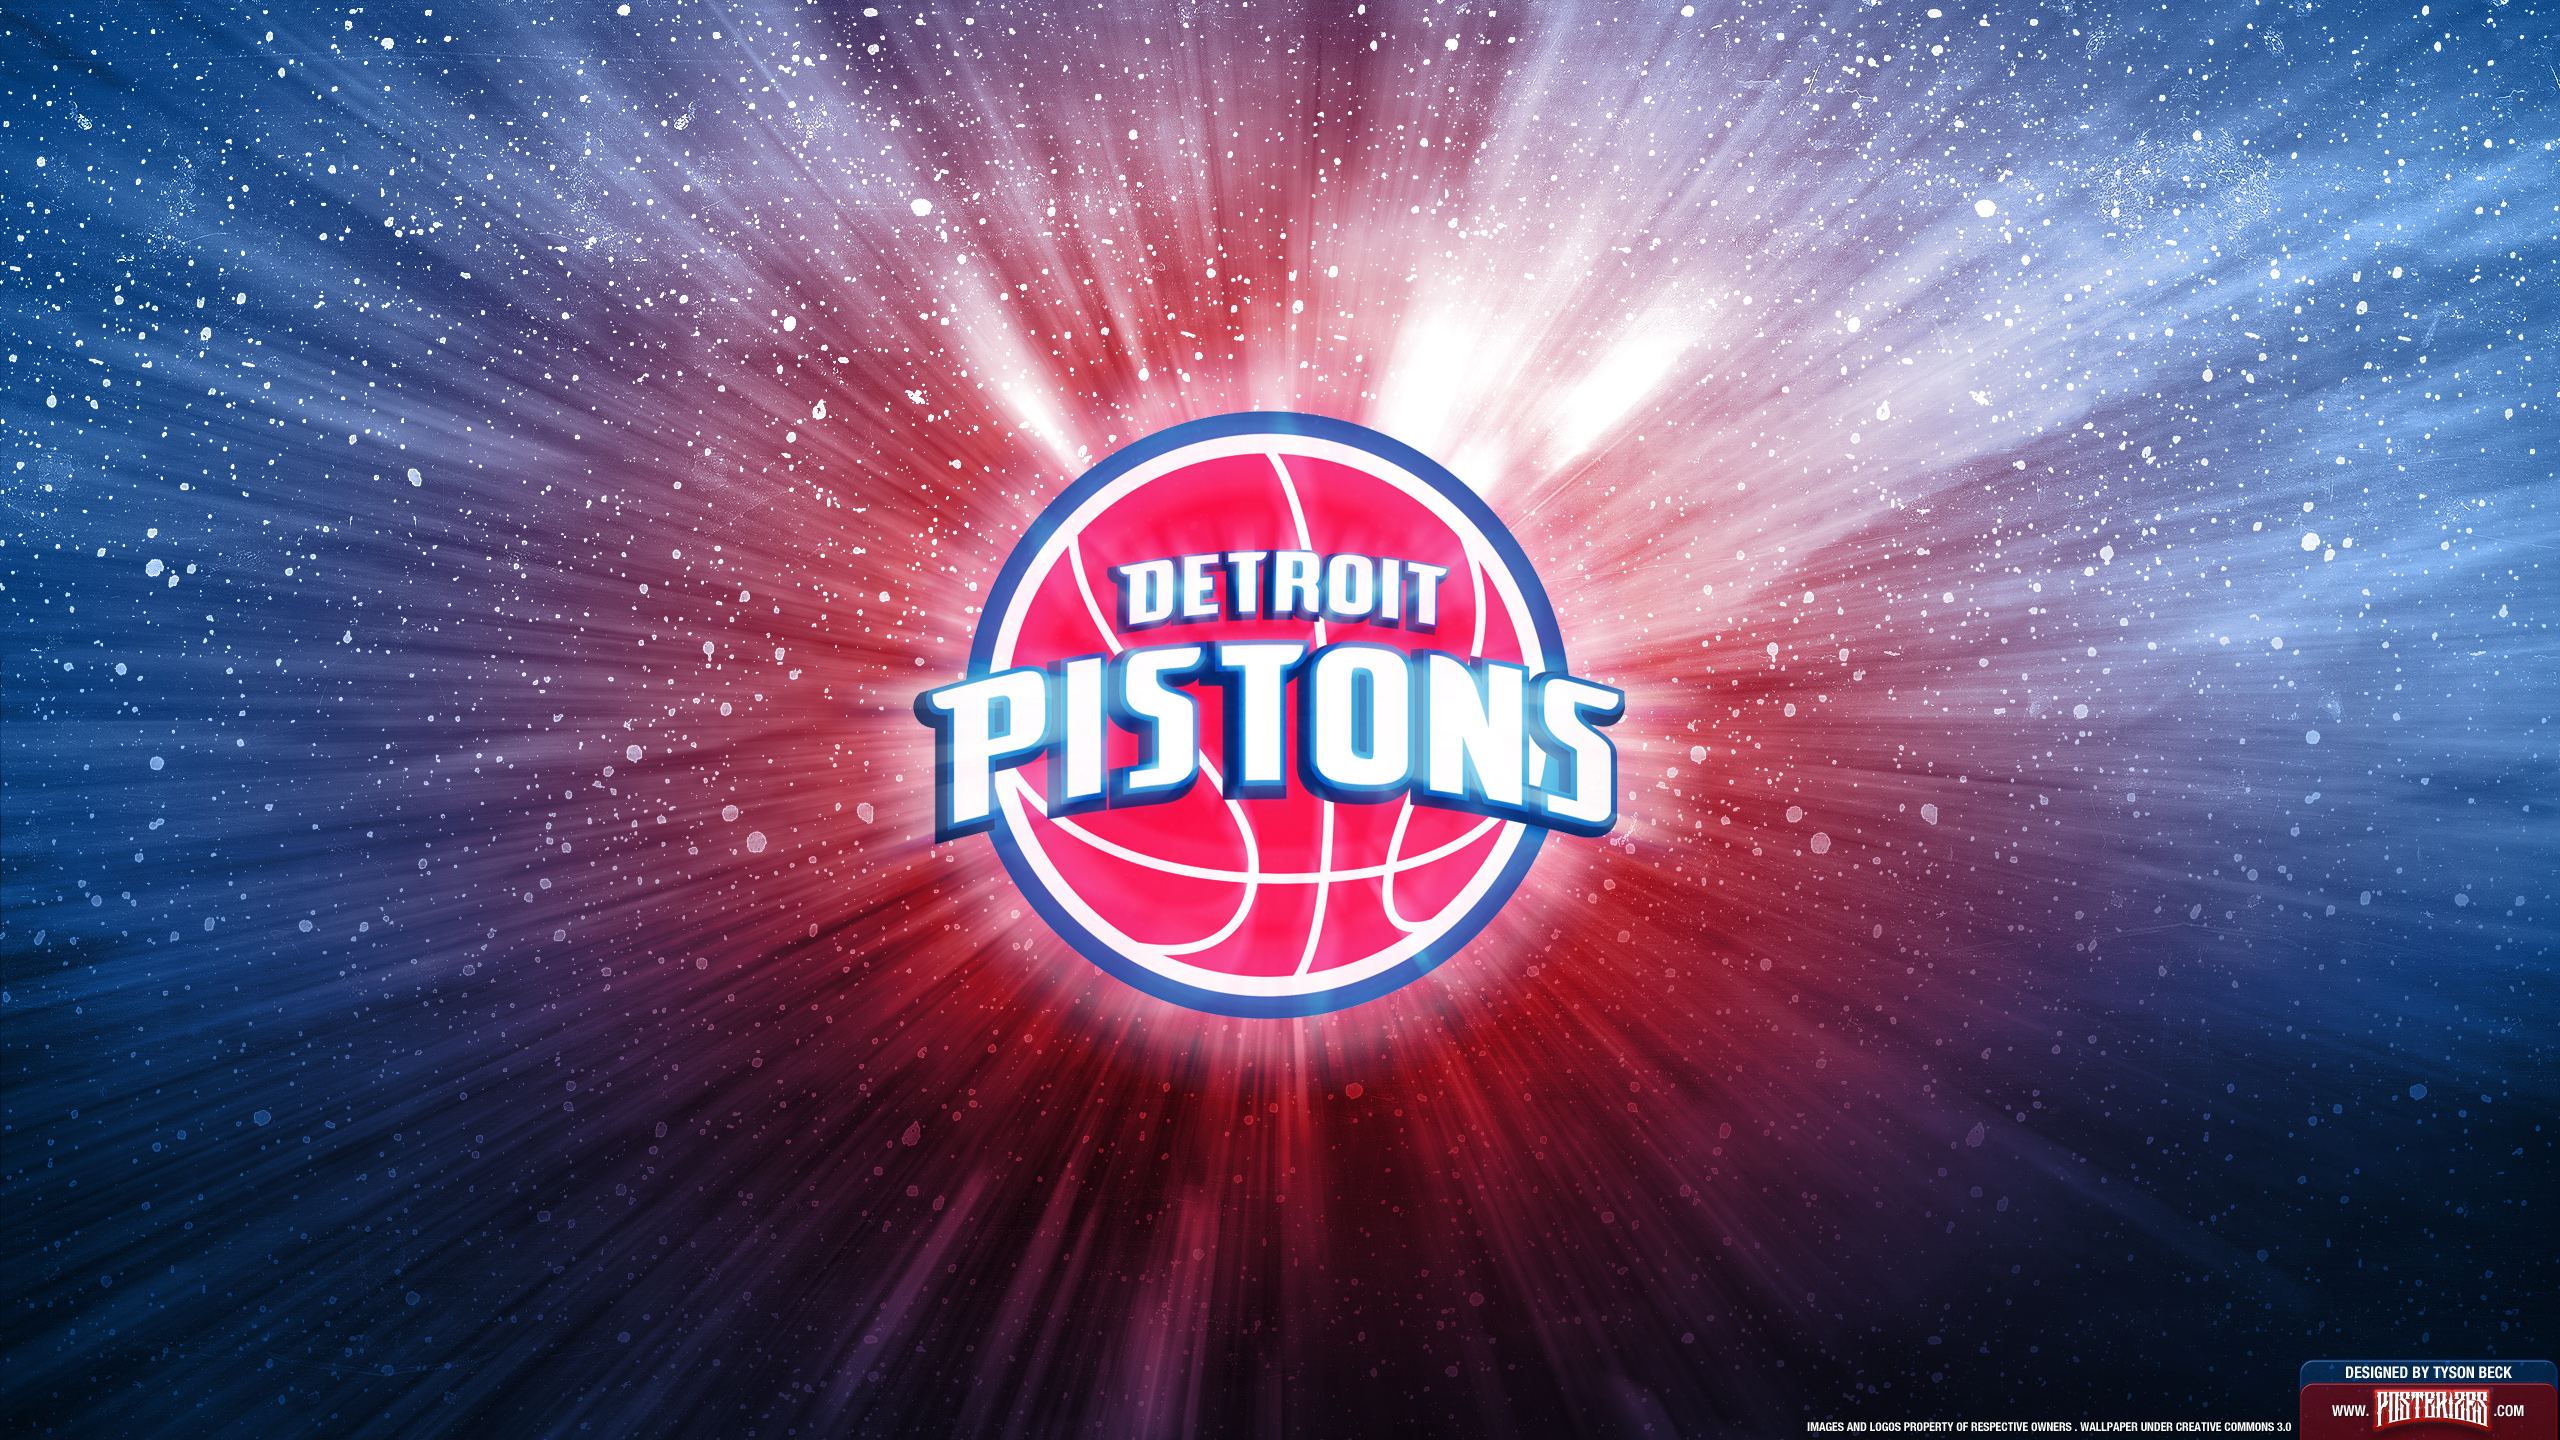 Nice Images Collection: Detroit Pistons Desktop Wallpapers